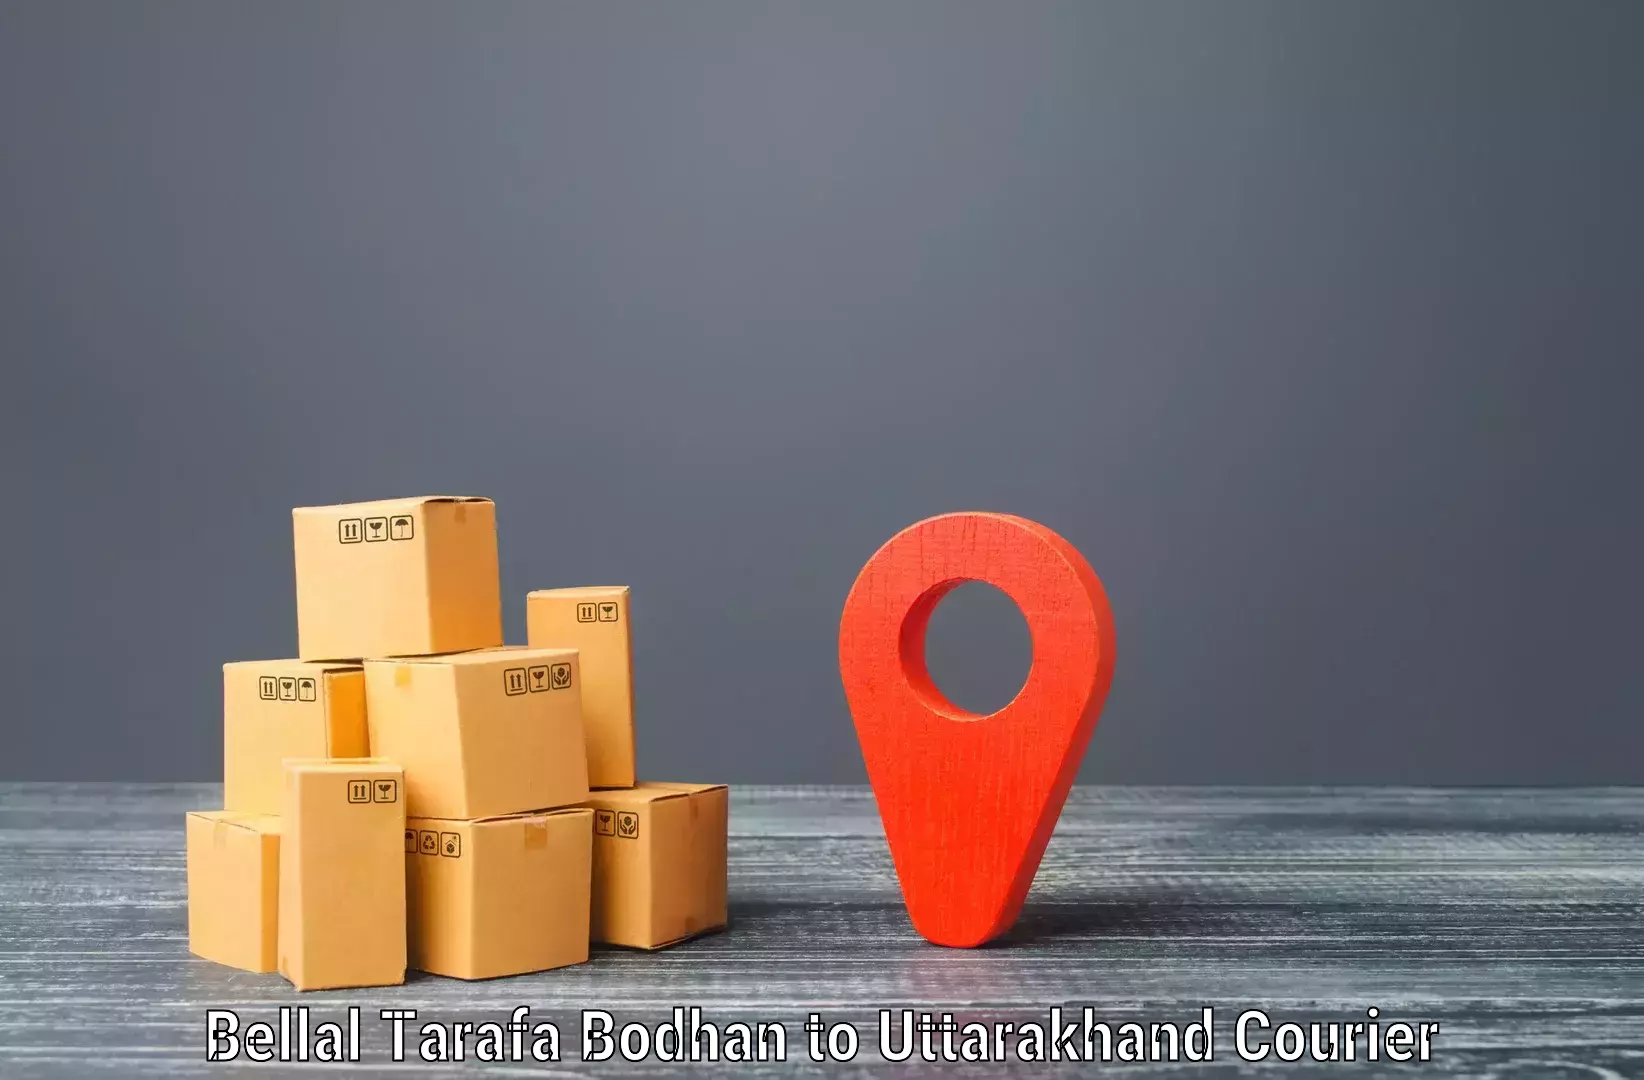 Global courier networks Bellal Tarafa Bodhan to IIT Roorkee